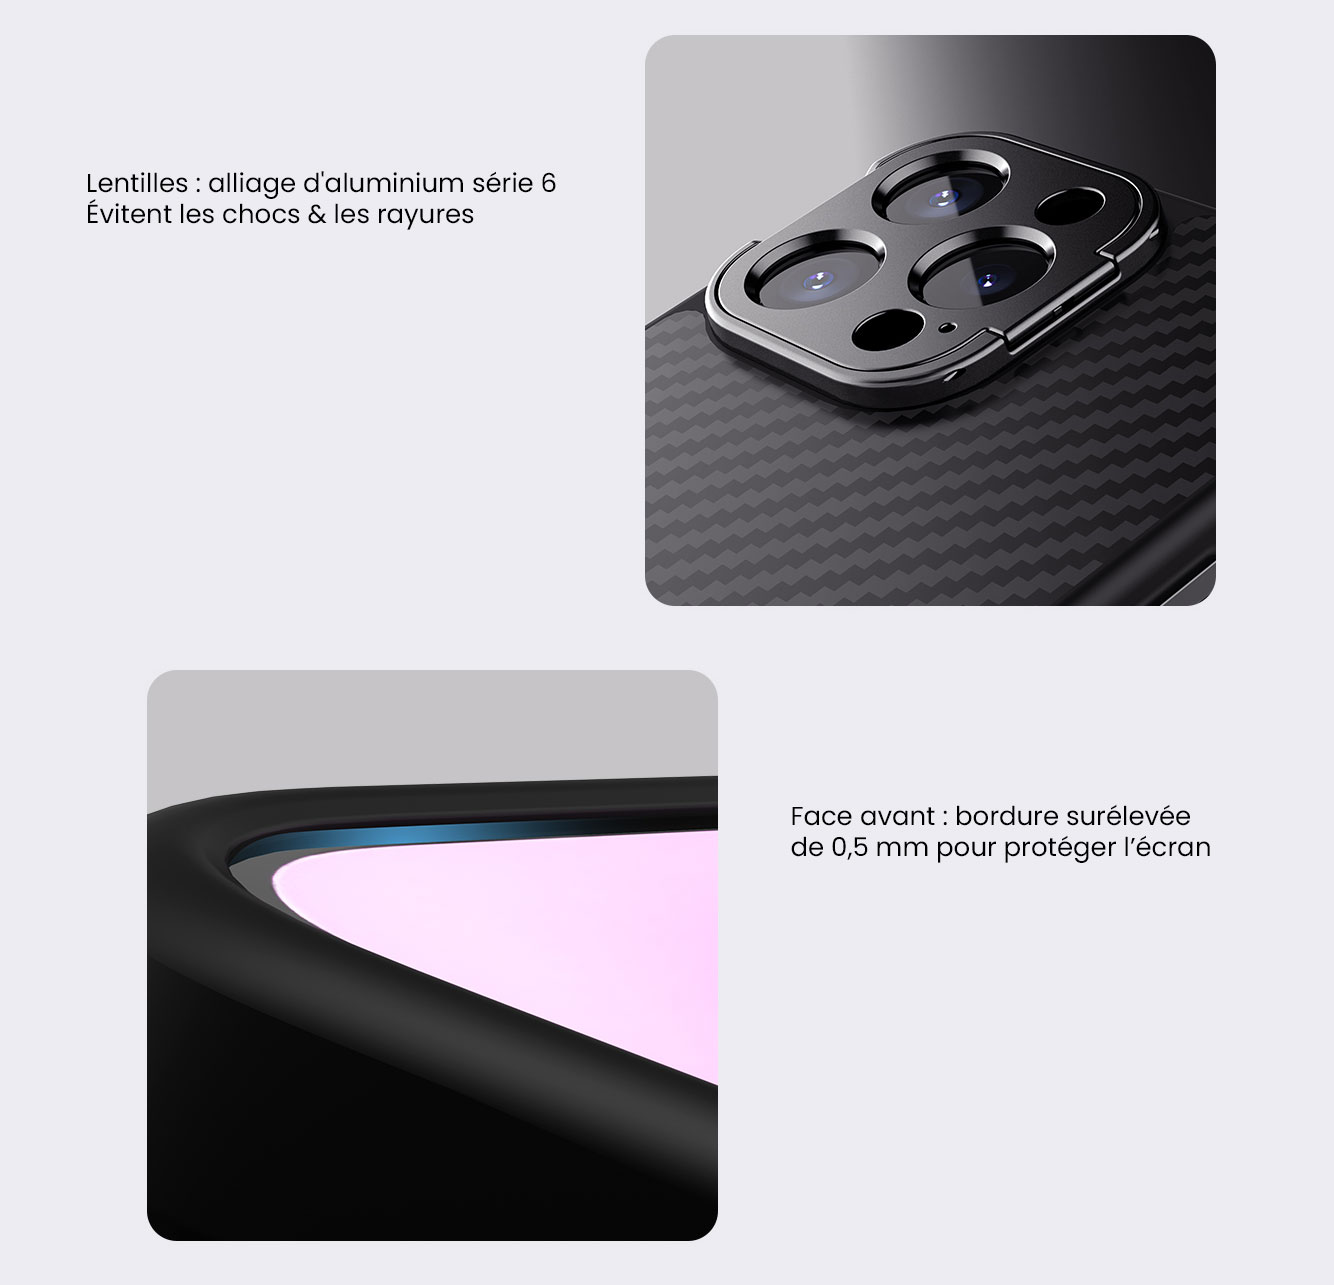 Coque MagSafe NILLKIN CarboProp En Fibre D'Aramide (Kevlar) pour iPhone 14 Pro